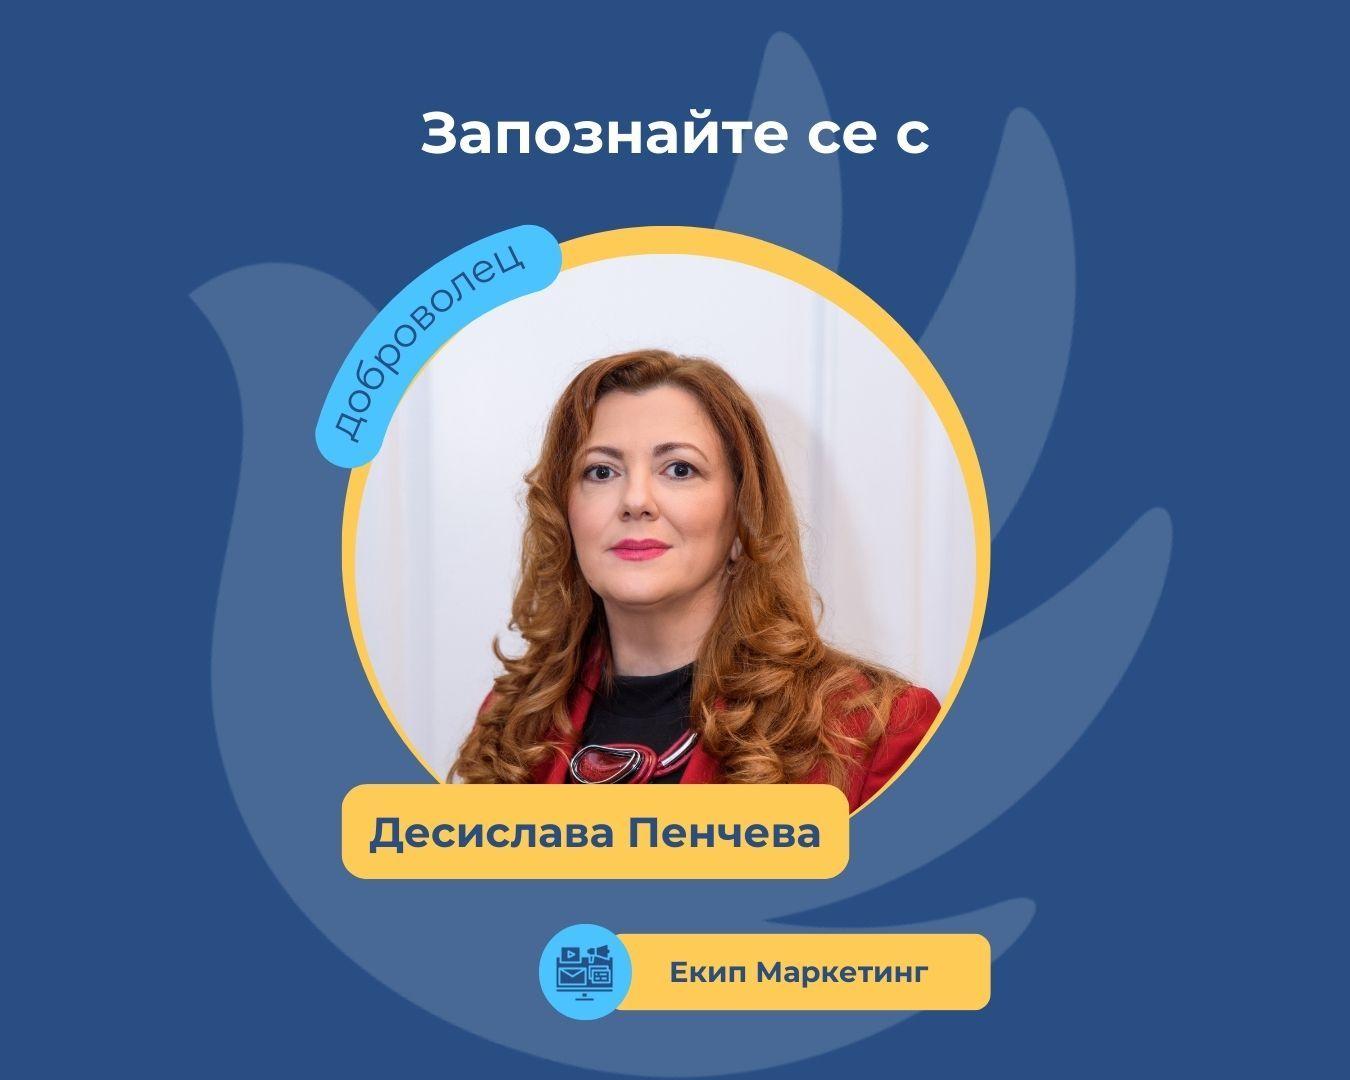 Десислава Пенчева - доброволец в екип „Маркетинг“ в Подкрепи.бг